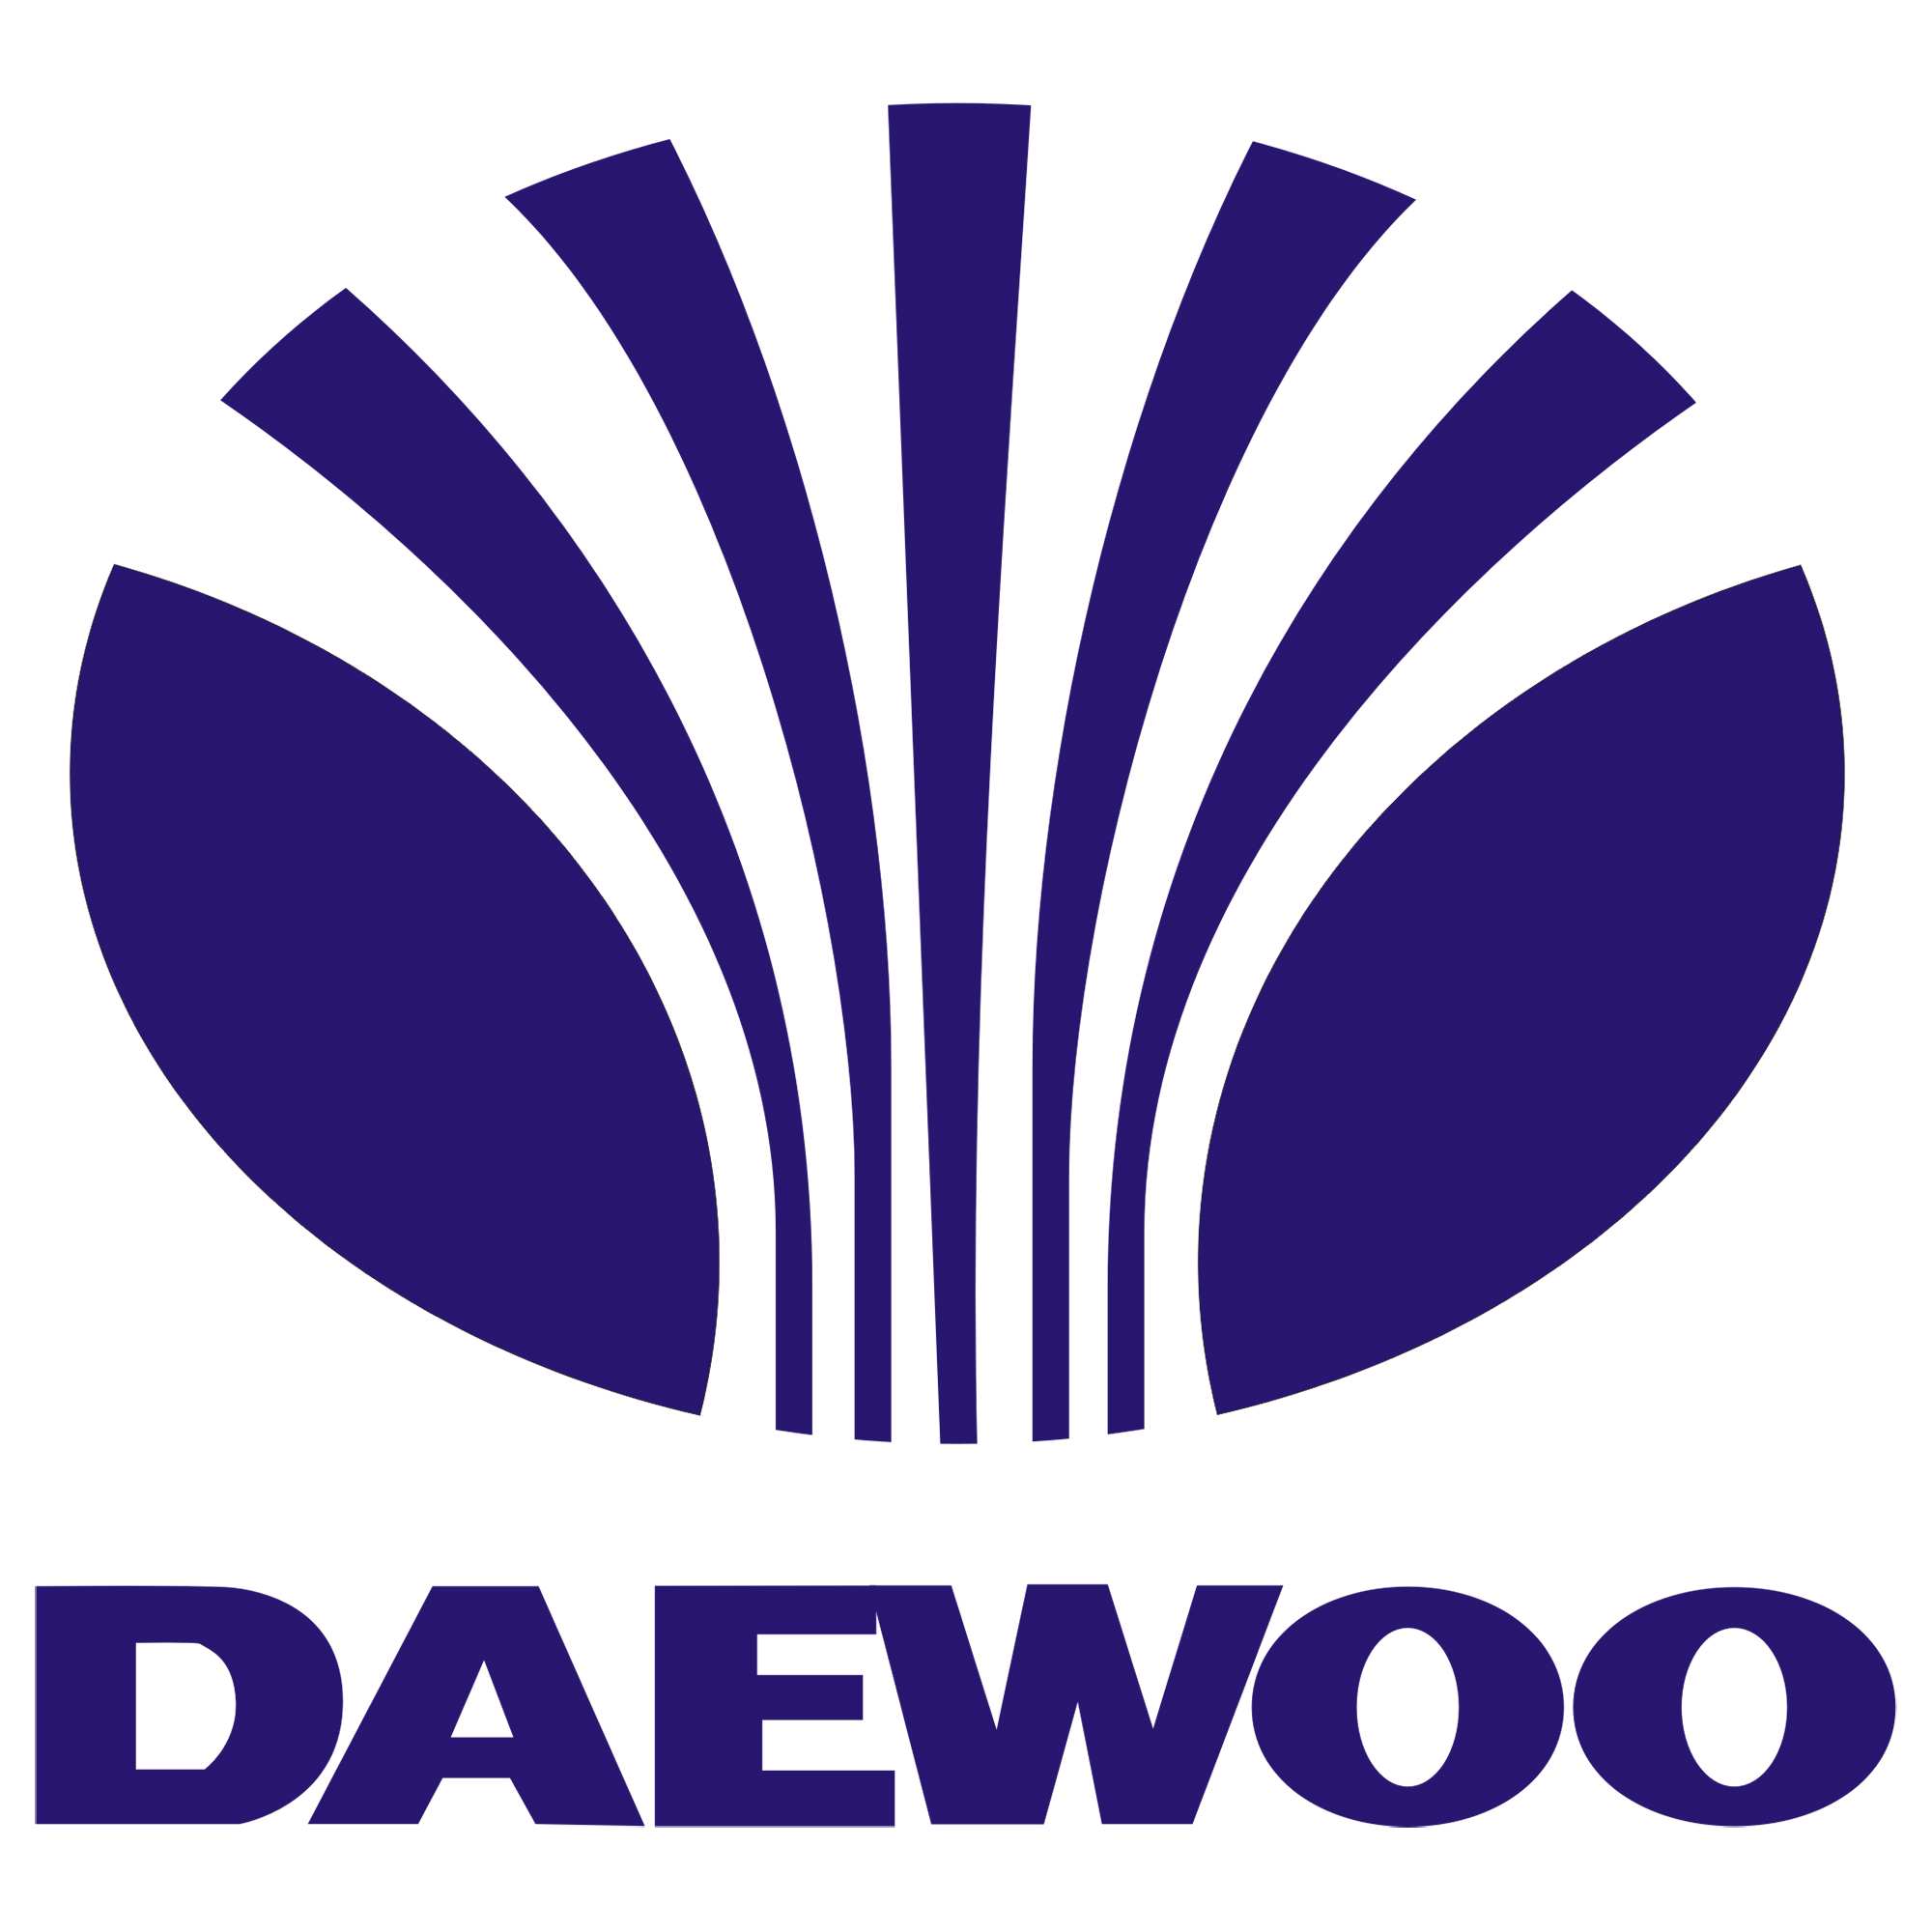 Daewoo 3013064600 Refrigerator Shelf Support Arm Genuine Original Equipment Manufacturer (OEM) Part